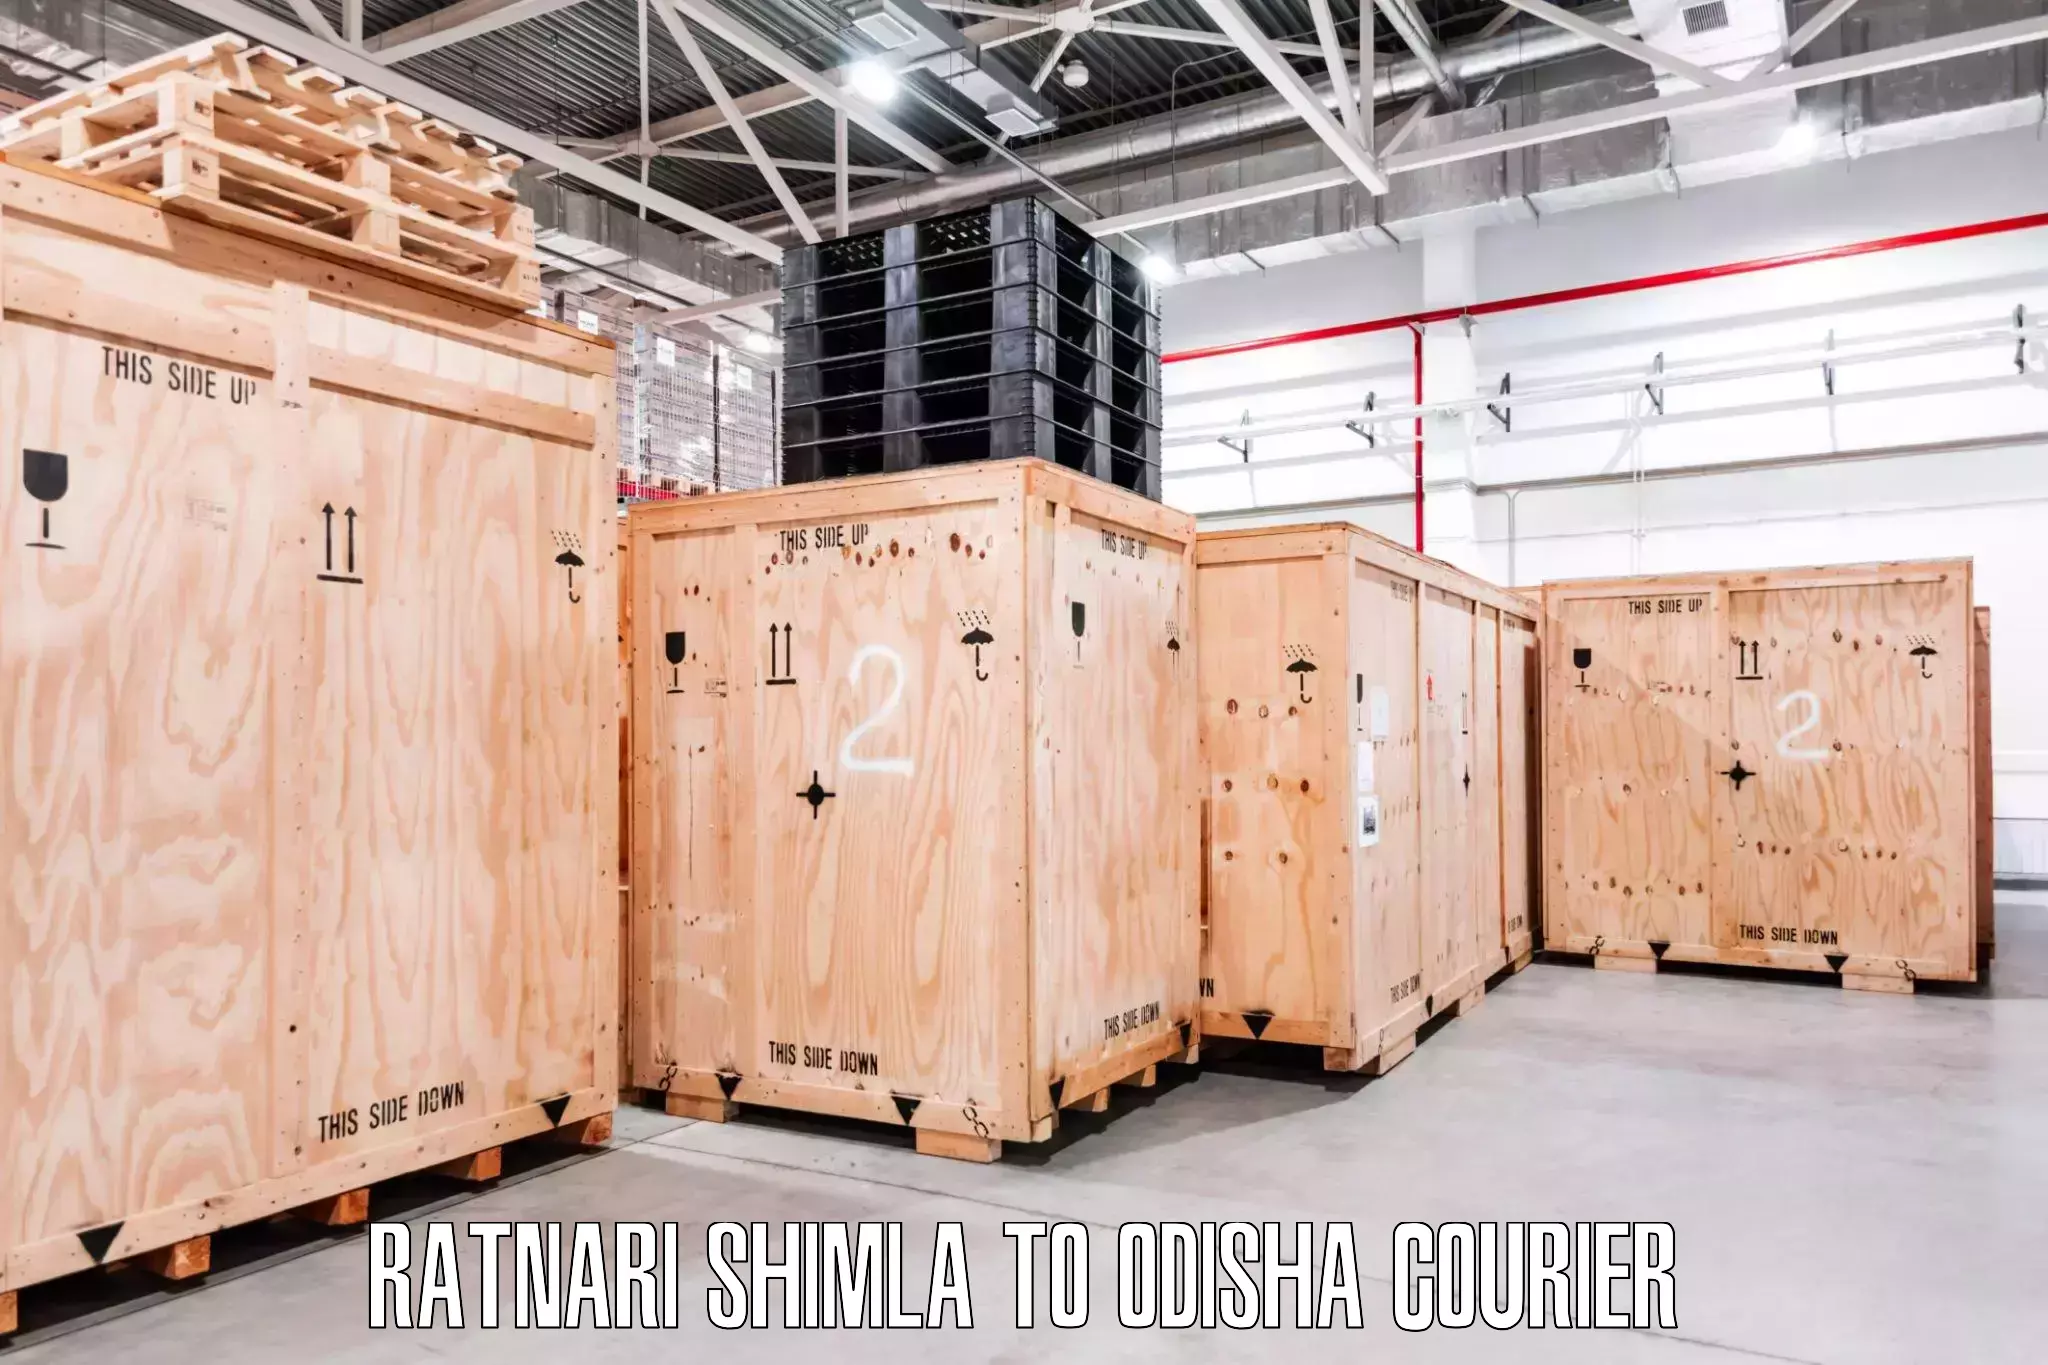 Furniture relocation experts Ratnari Shimla to Asika